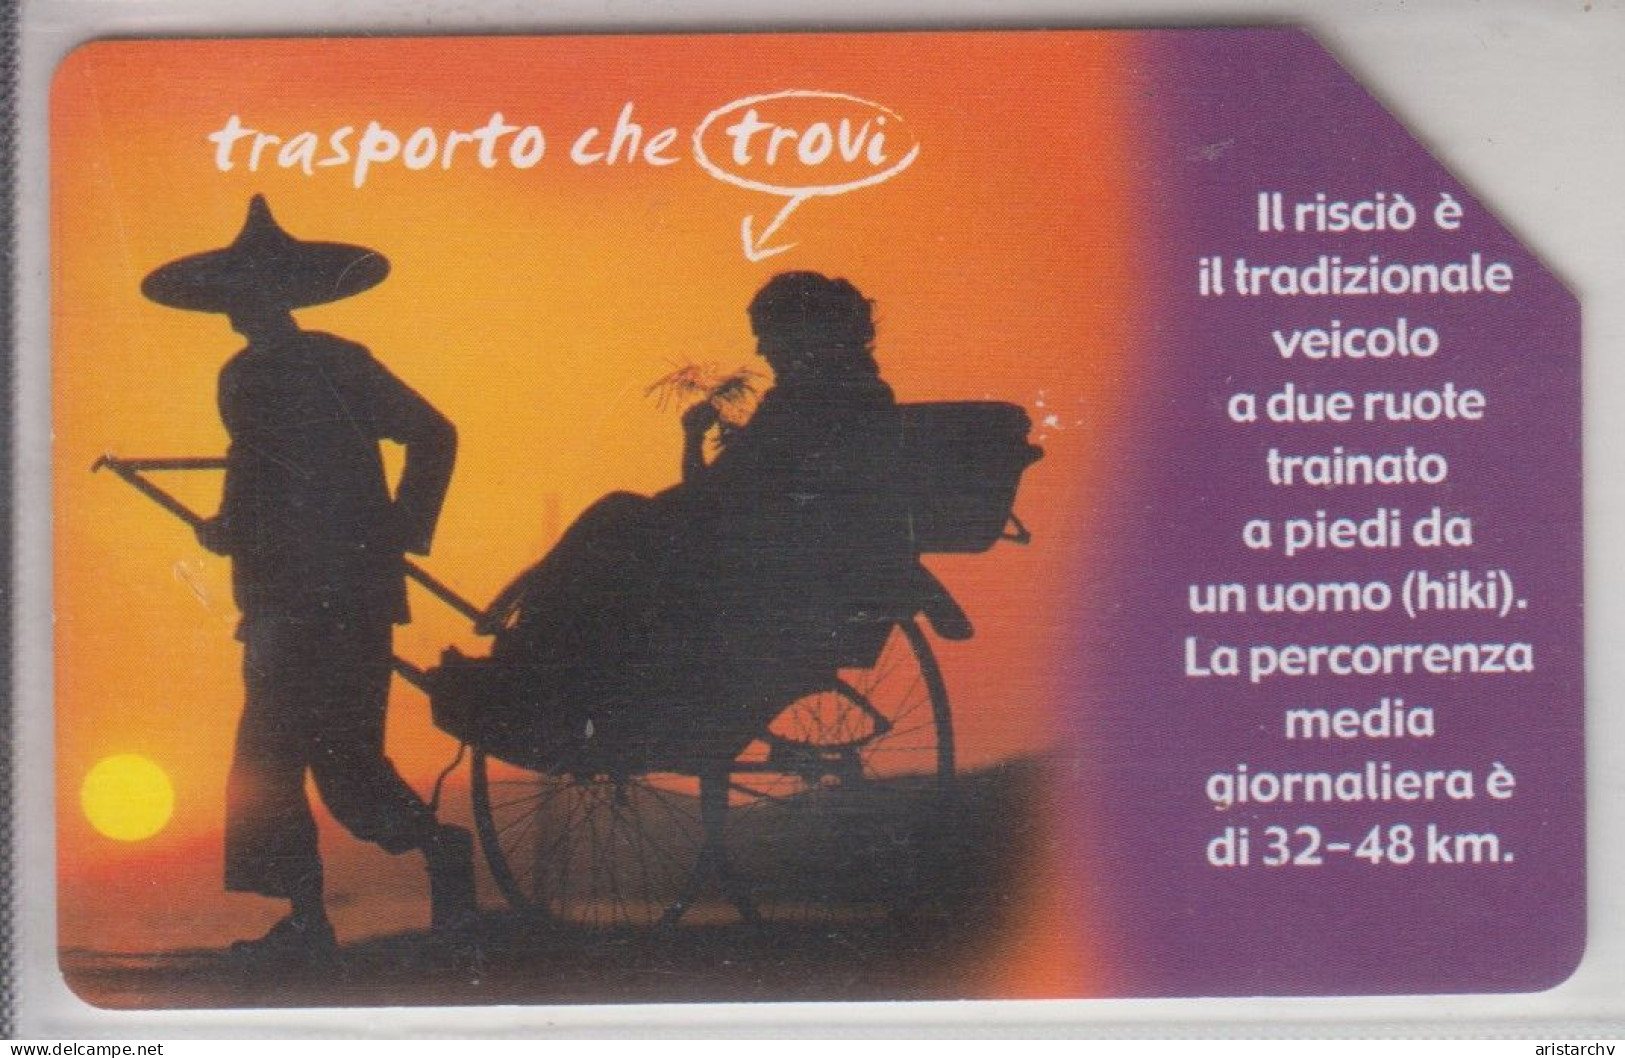 ITALY 2003 TRANSPORT YOU FIND TAXI BICYCLE VENEZIA SENT MARCO PALACE GONDOLA RIKSHA 4 CARDS - Publiques Ordinaires